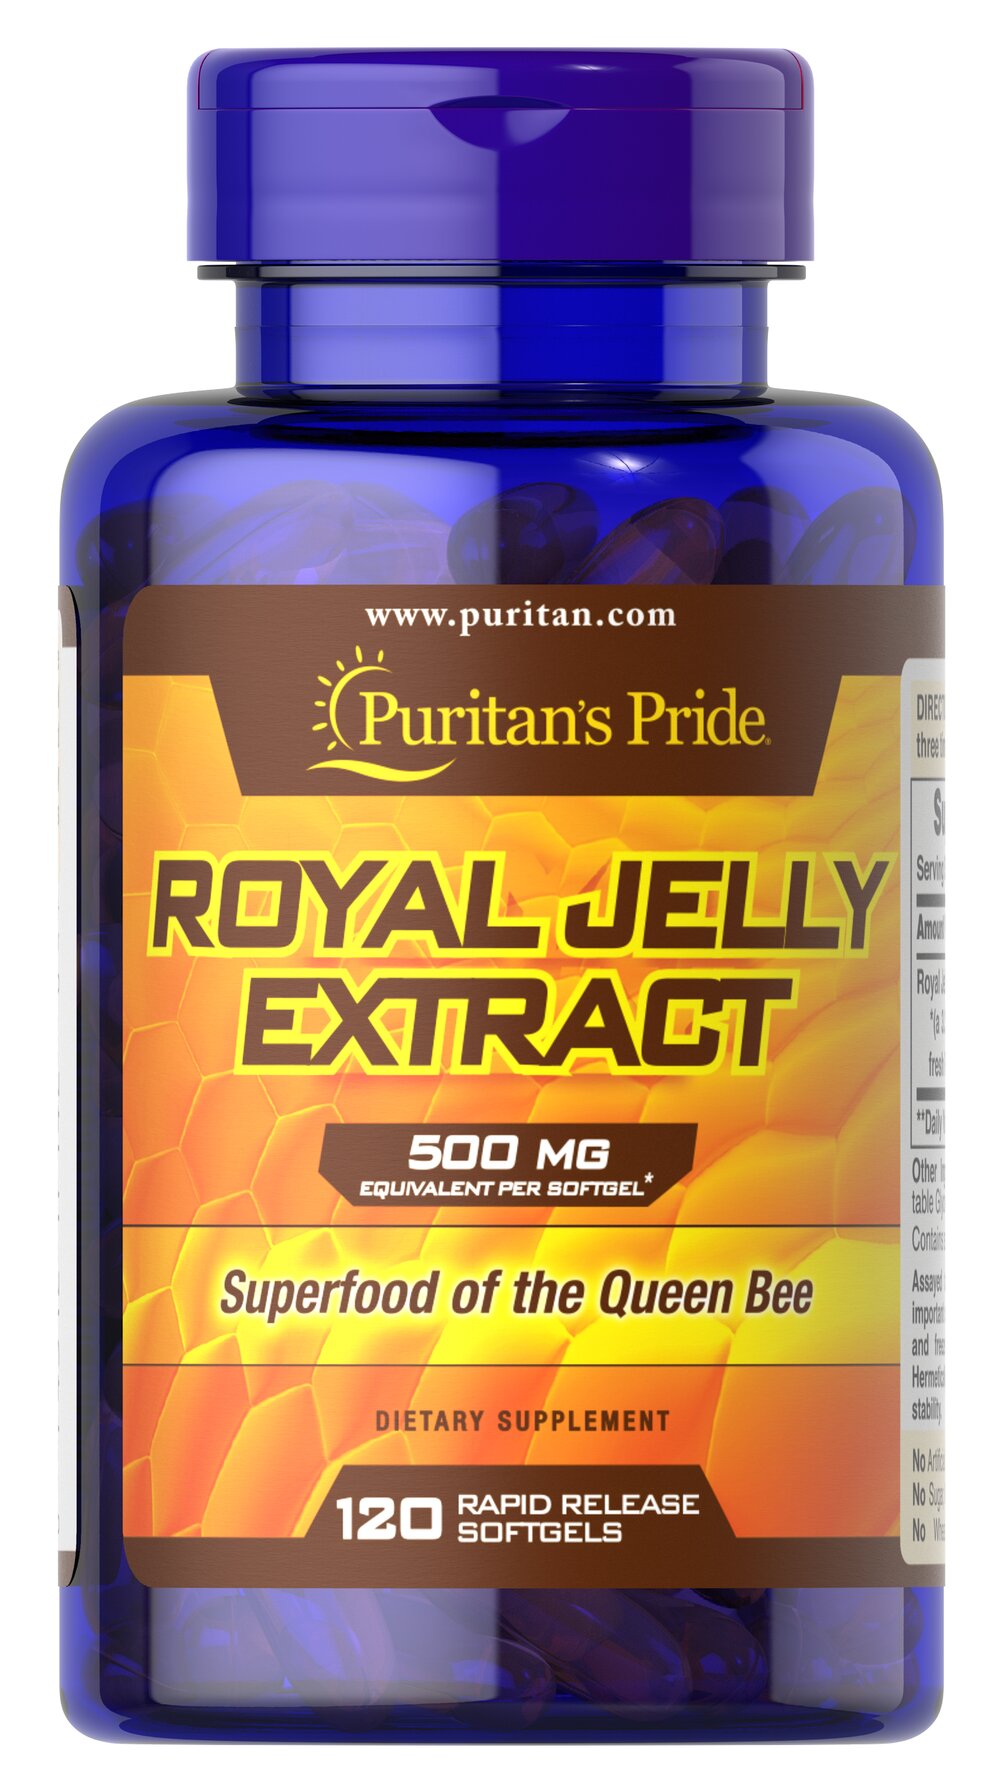  Royal Jelly Extract  蜂王乳精華提取物 500 MG